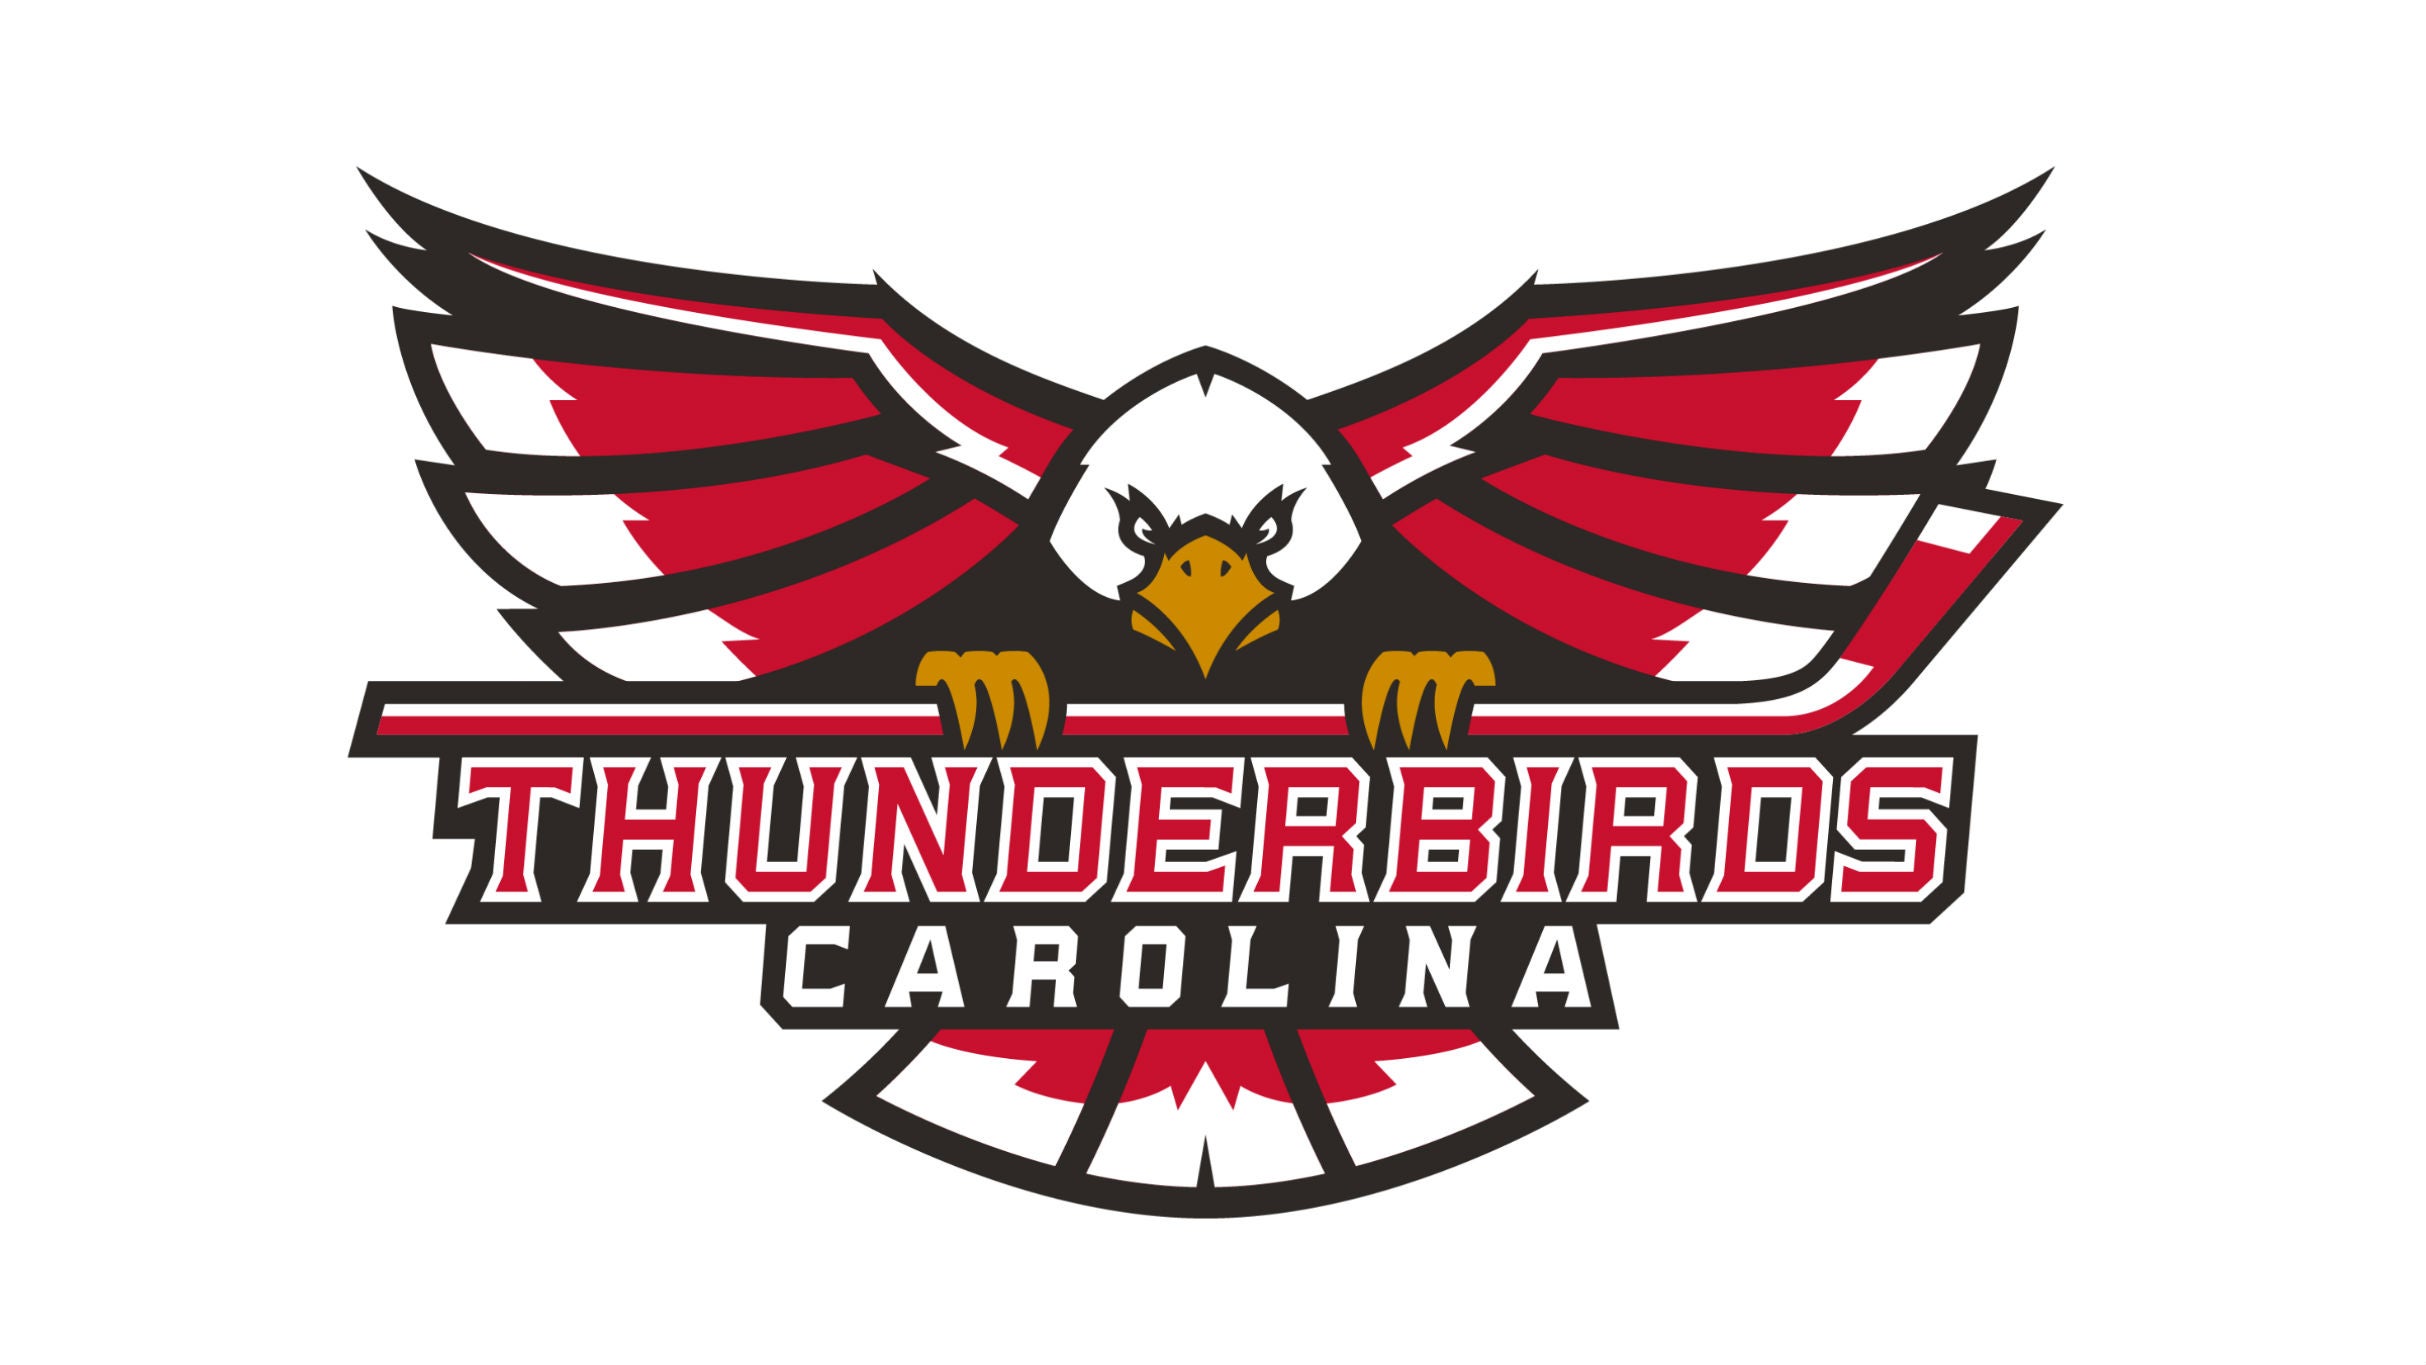 Carolina Thunderbirds Playoff Game A